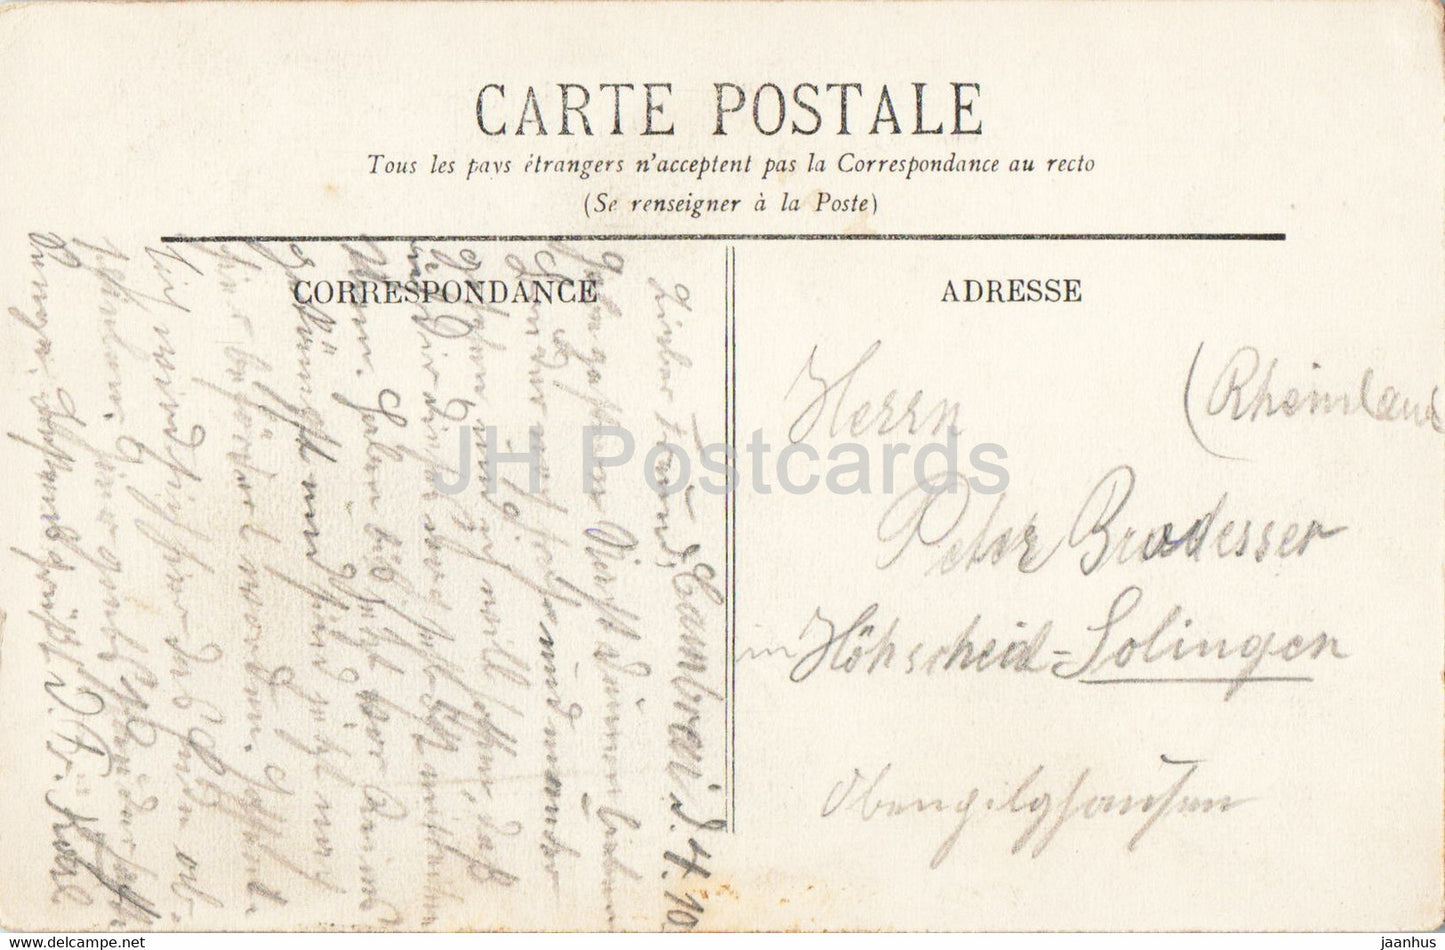 Cambrai - Batiste - Denkmal - alte Postkarte - 1910 - Frankreich - gebraucht